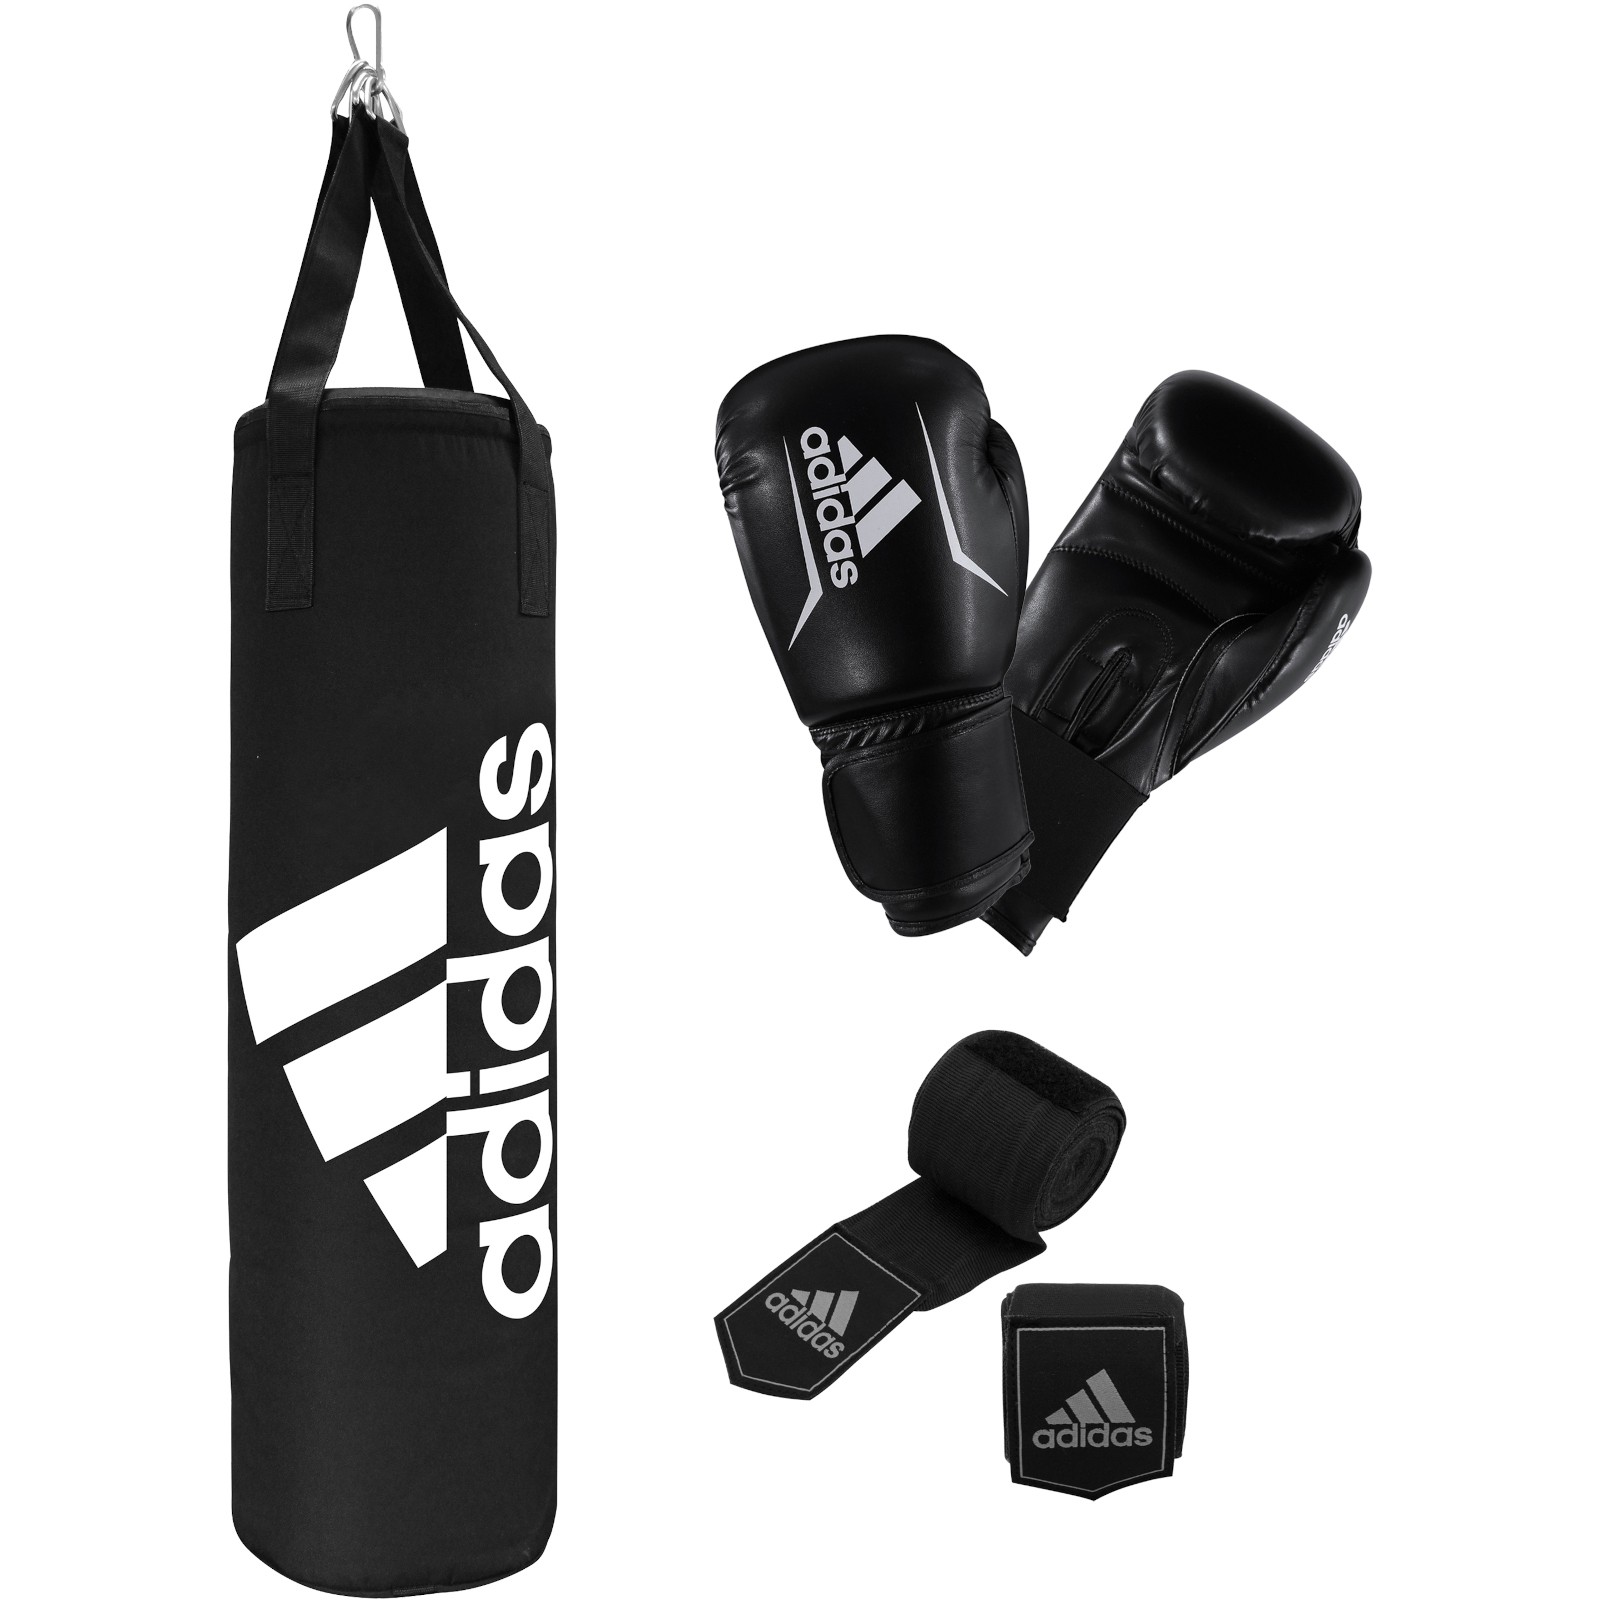 Adidas Boxing Bag Set - Fitshop